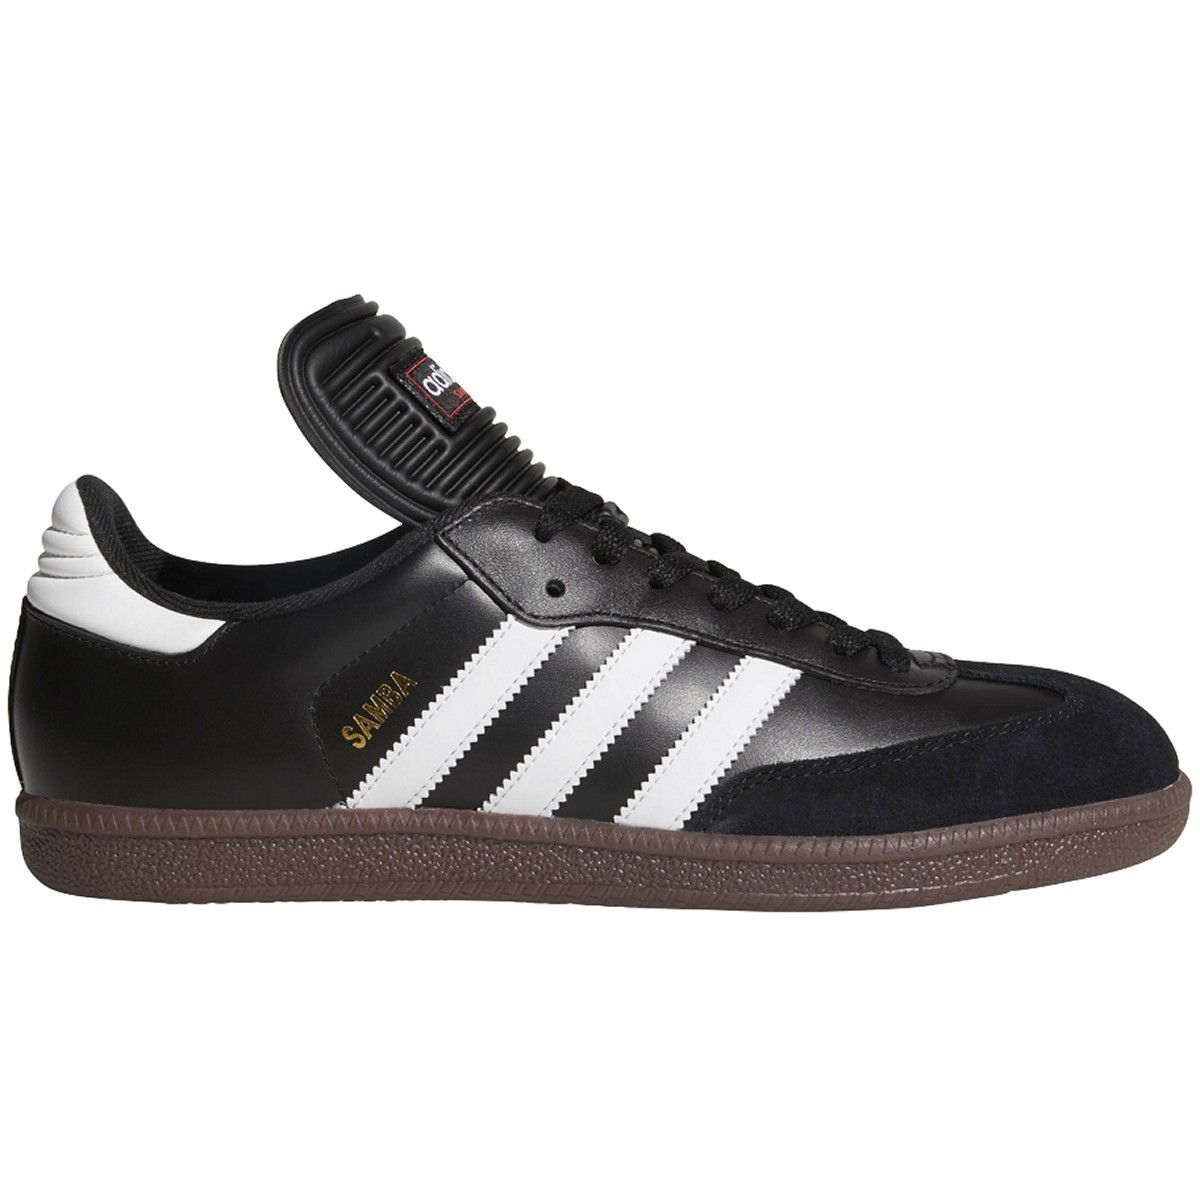 adidas Originals Samba Classic Indoor Soccer Shoes - Black and White